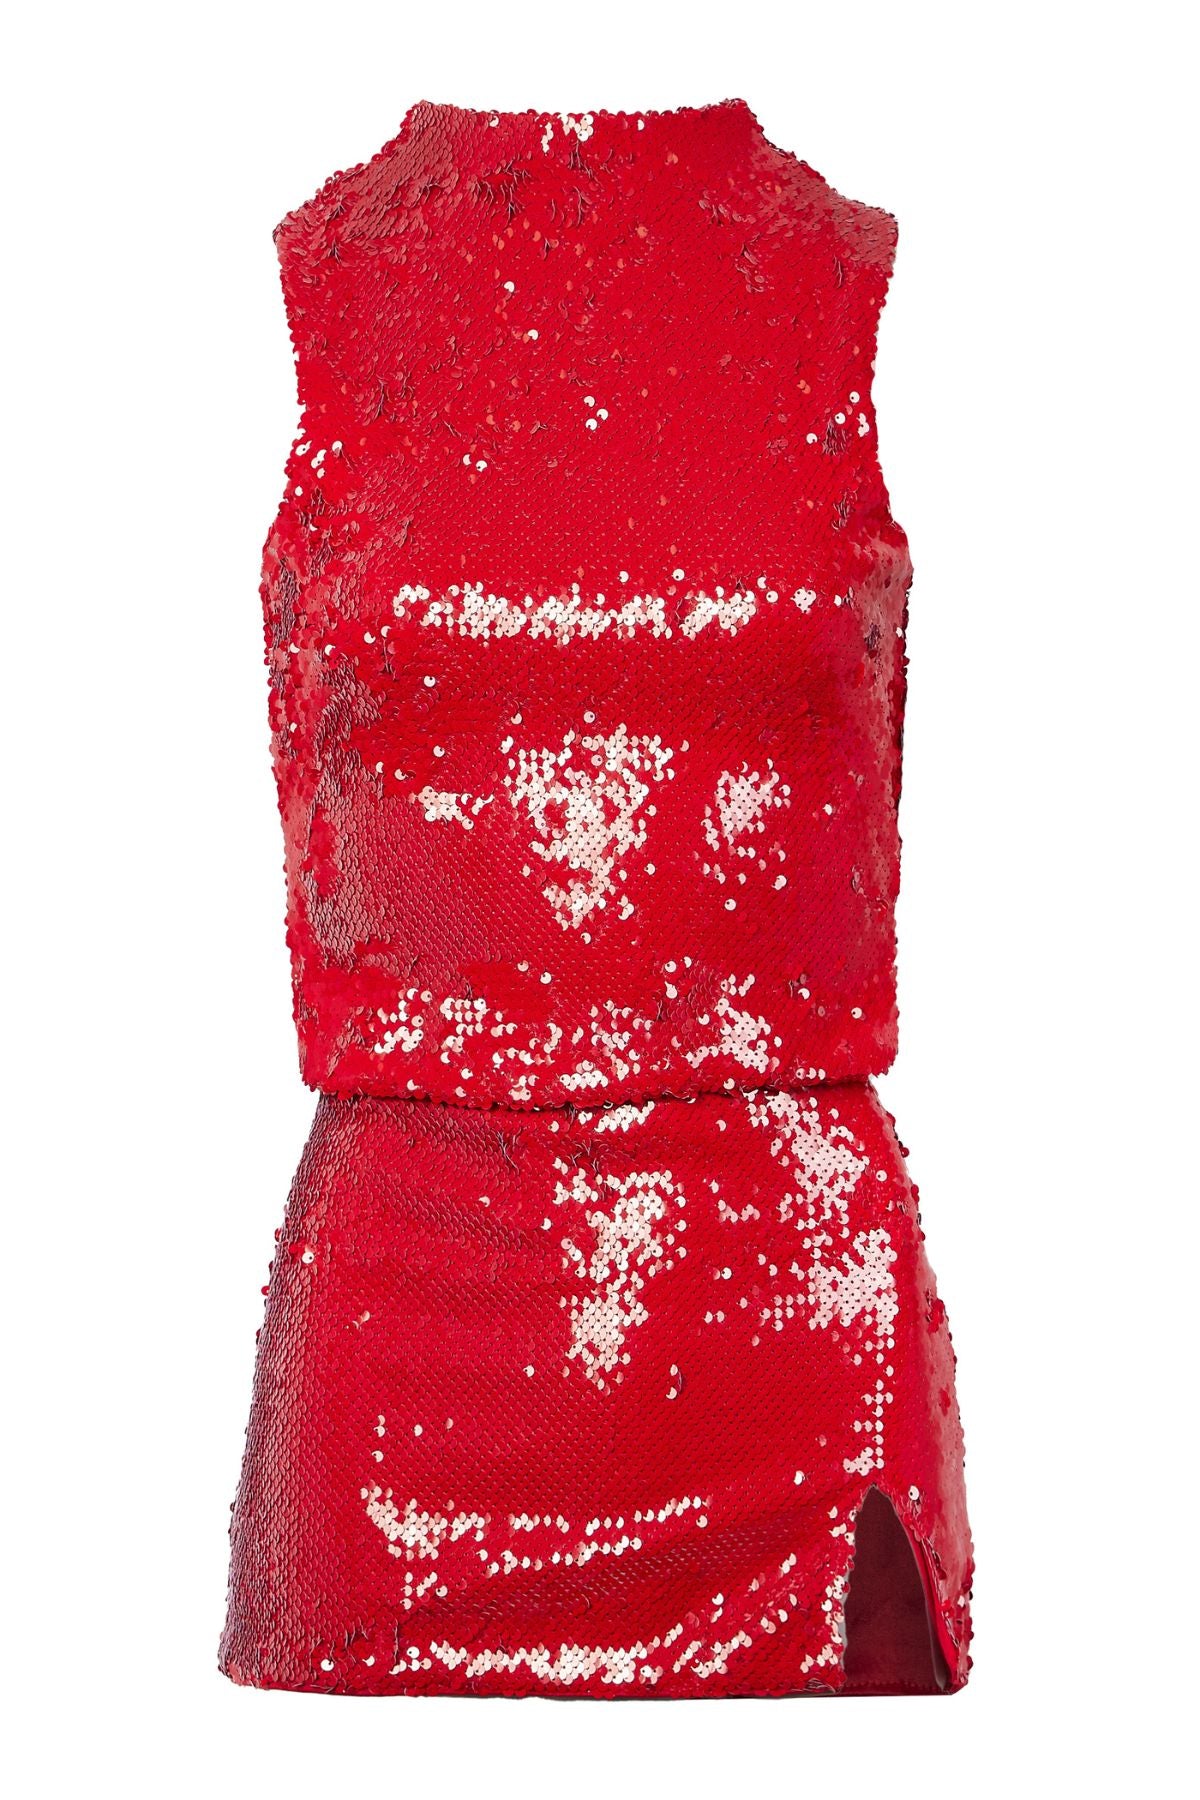 JOSIE Red Sequin Top & Skirt Co Ord